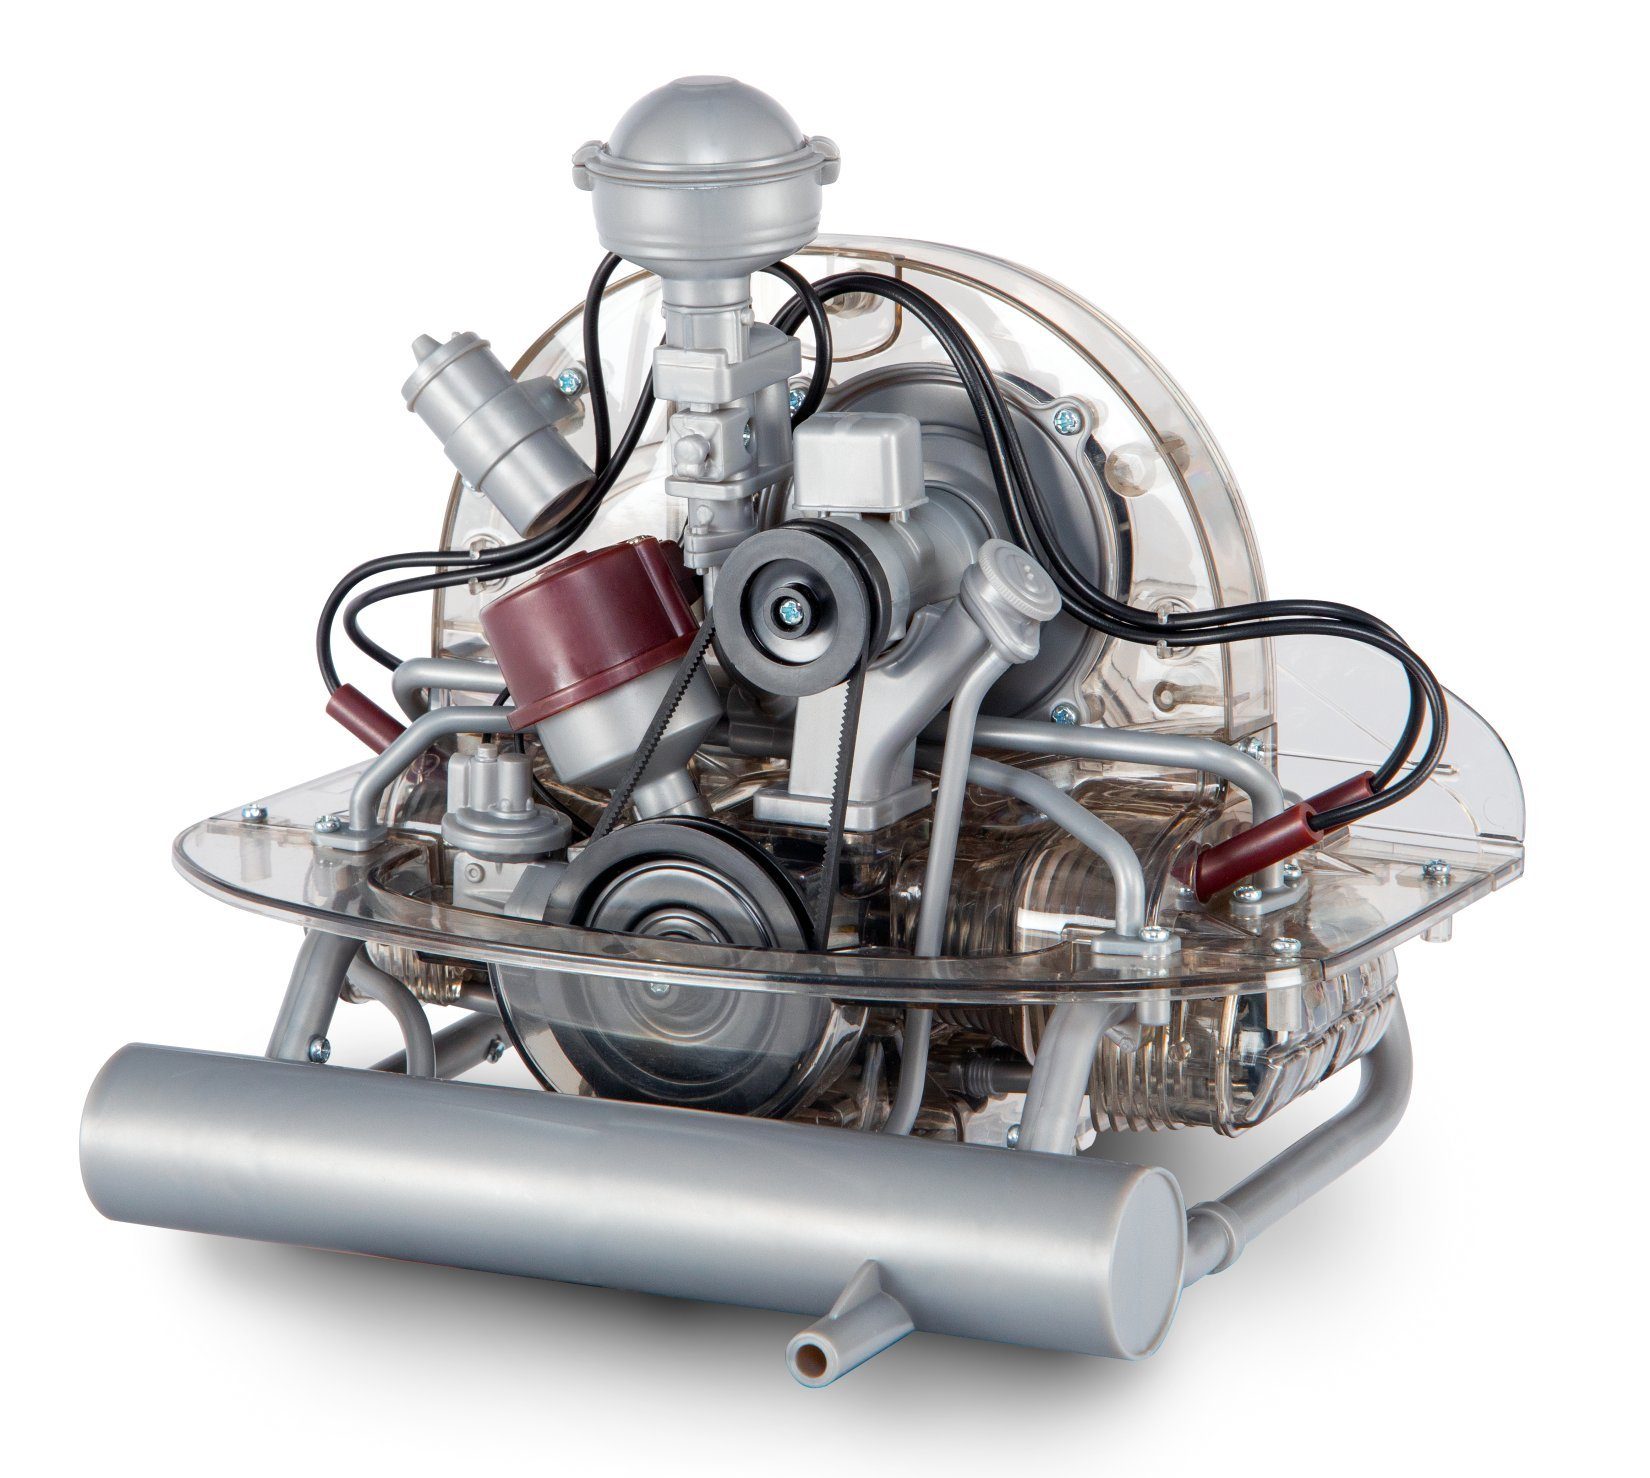 4-Zylinder Bausatz Puzzleteile Käfer Franzis 3D-Puzzle VW Boxermotor,